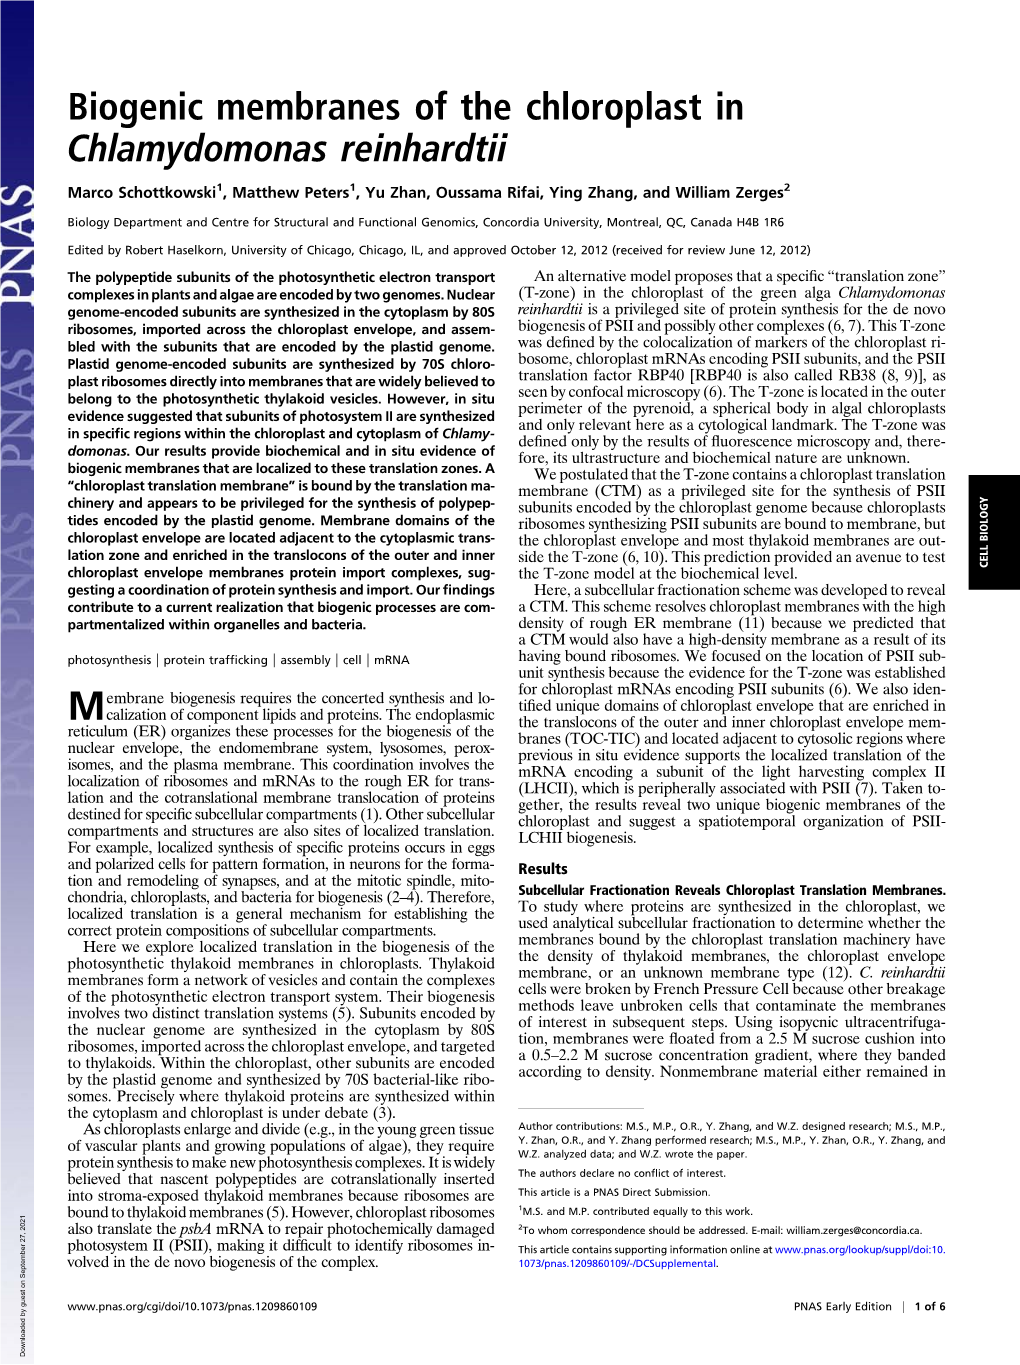 Biogenic Membranes of the Chloroplast in Chlamydomonas Reinhardtii